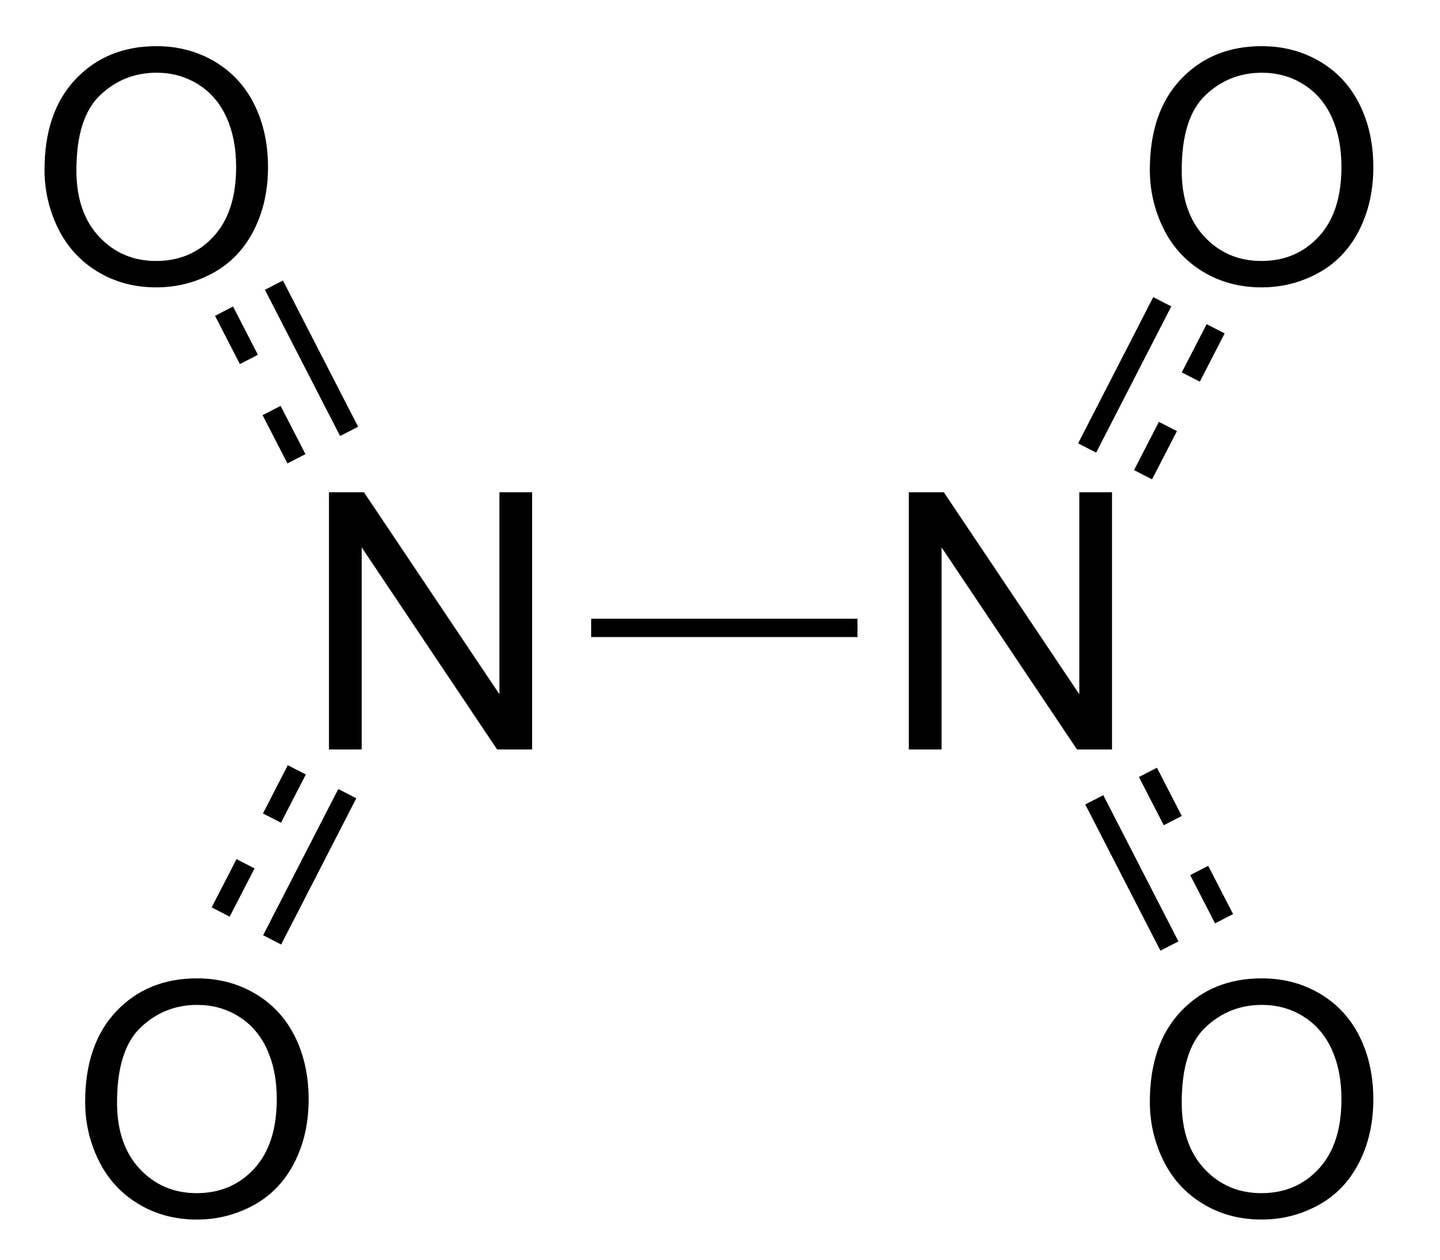 Dinitrogen tetroxide's chemical formula. <em>Kemikungen via Wikimedia Commons</em>